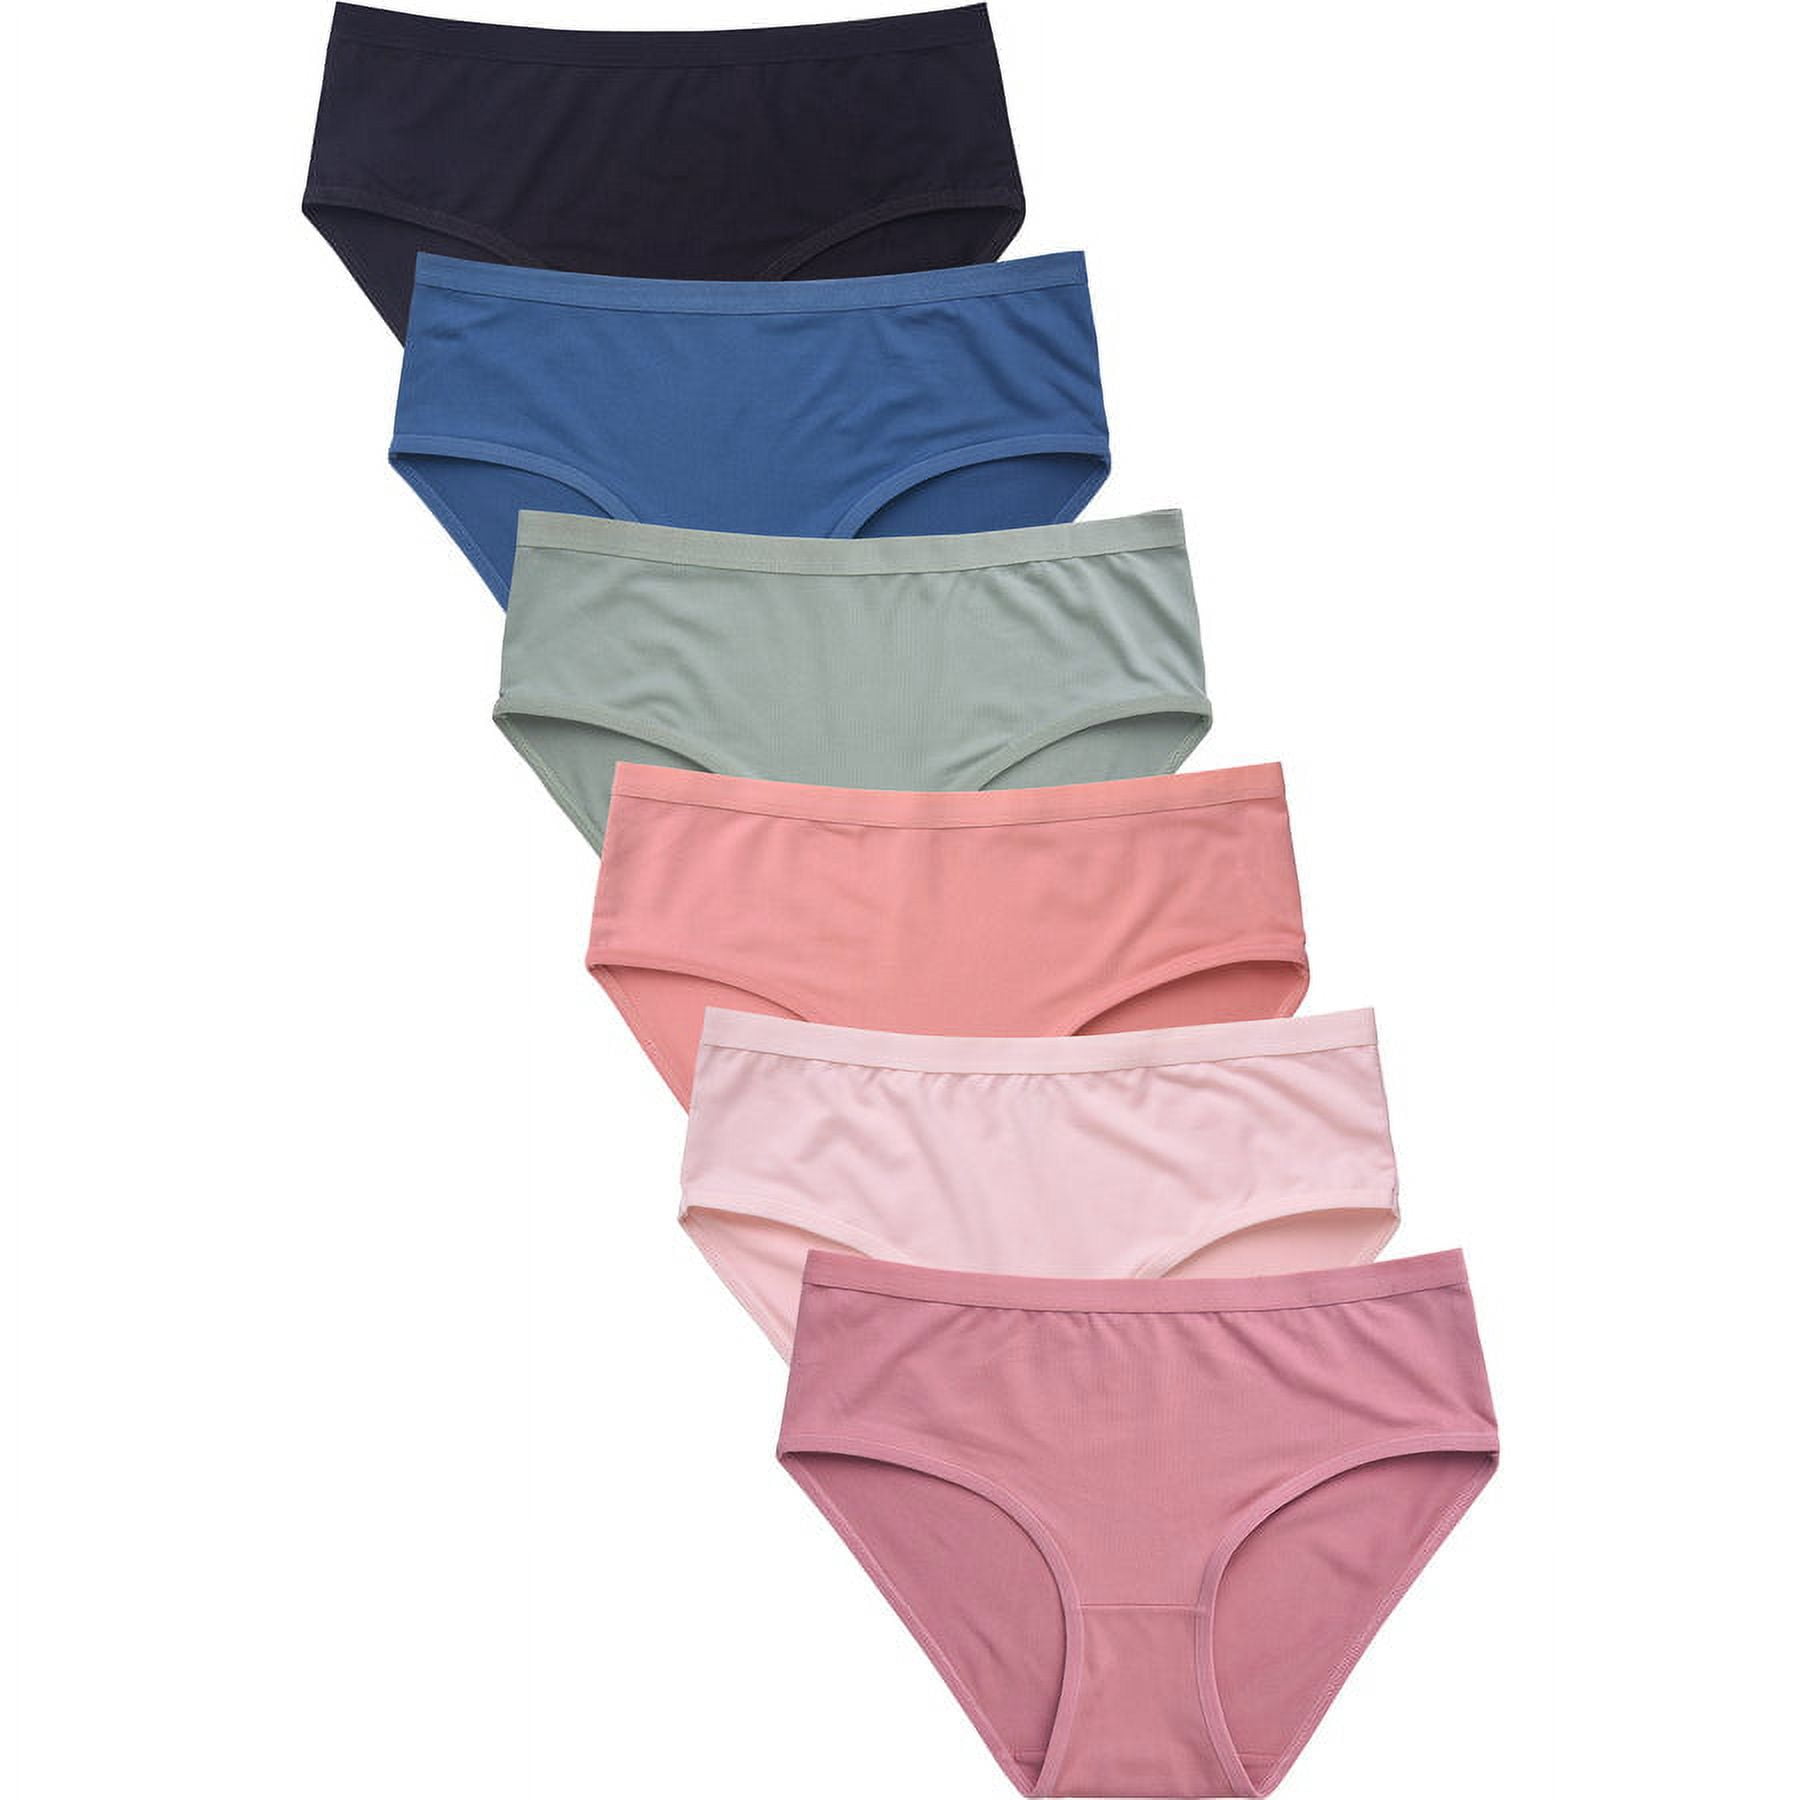 6 Packs of MAMIA Women's Ladies No Show Cotton Underwear